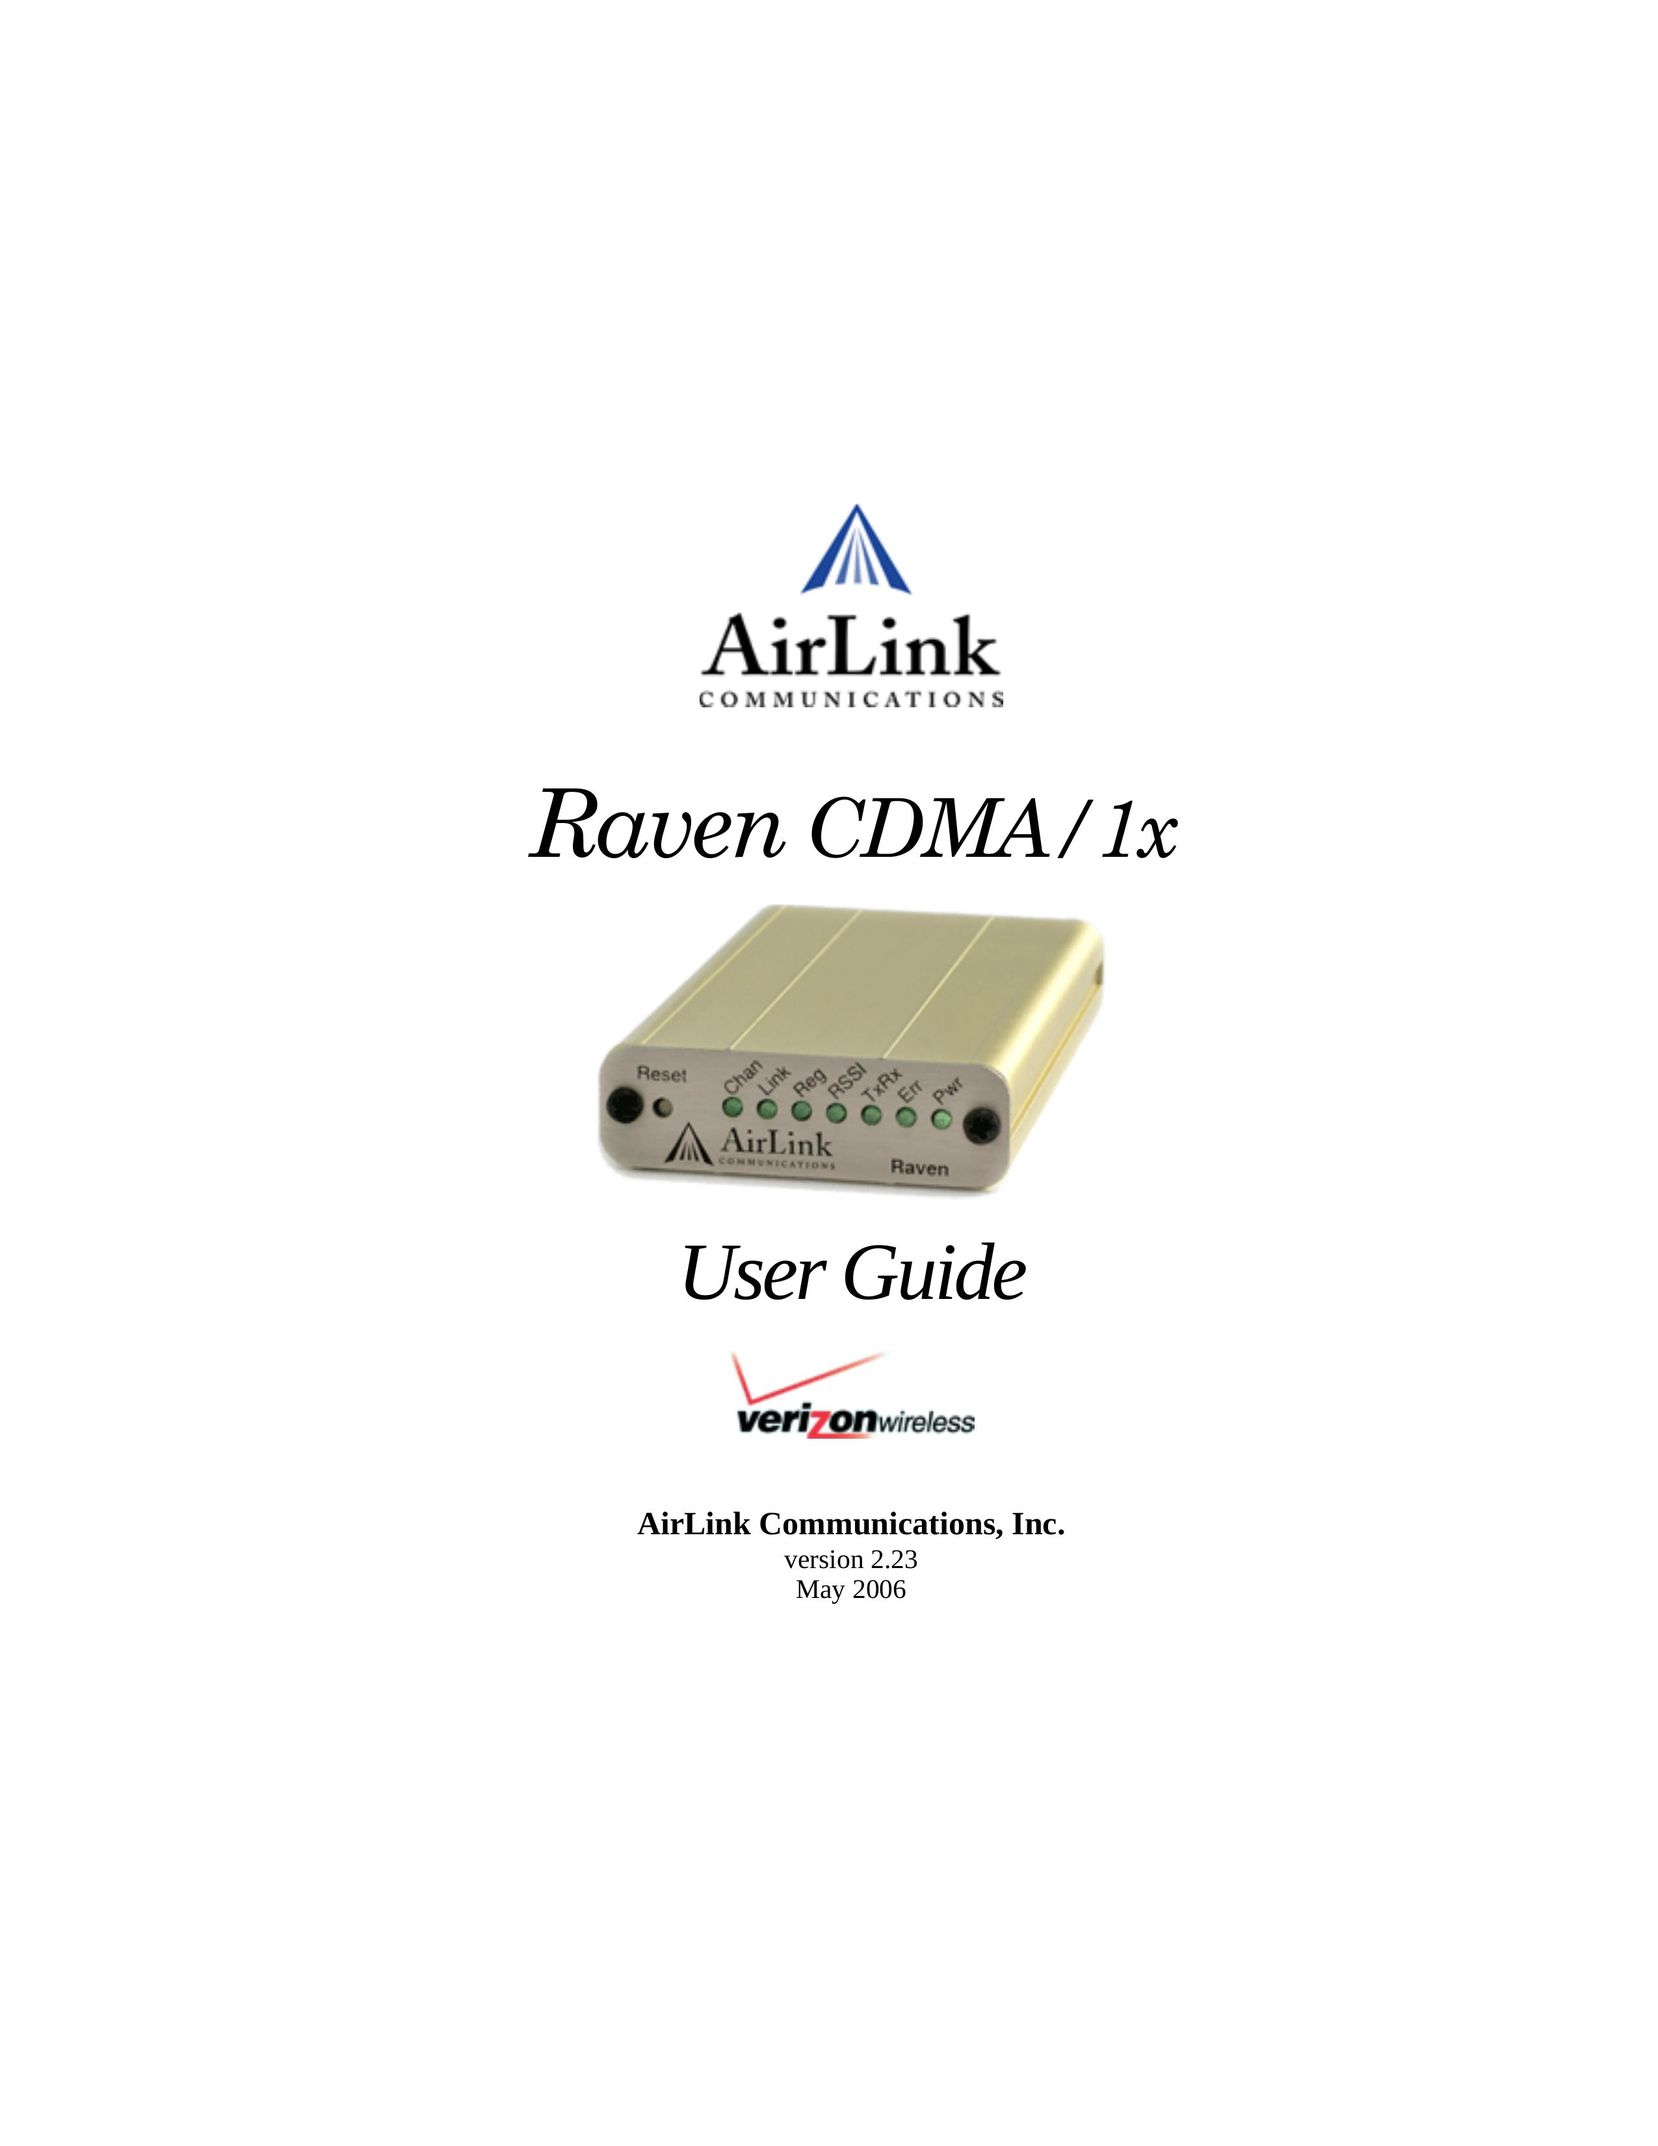 Airlink CDMA/1x Network Card User Manual